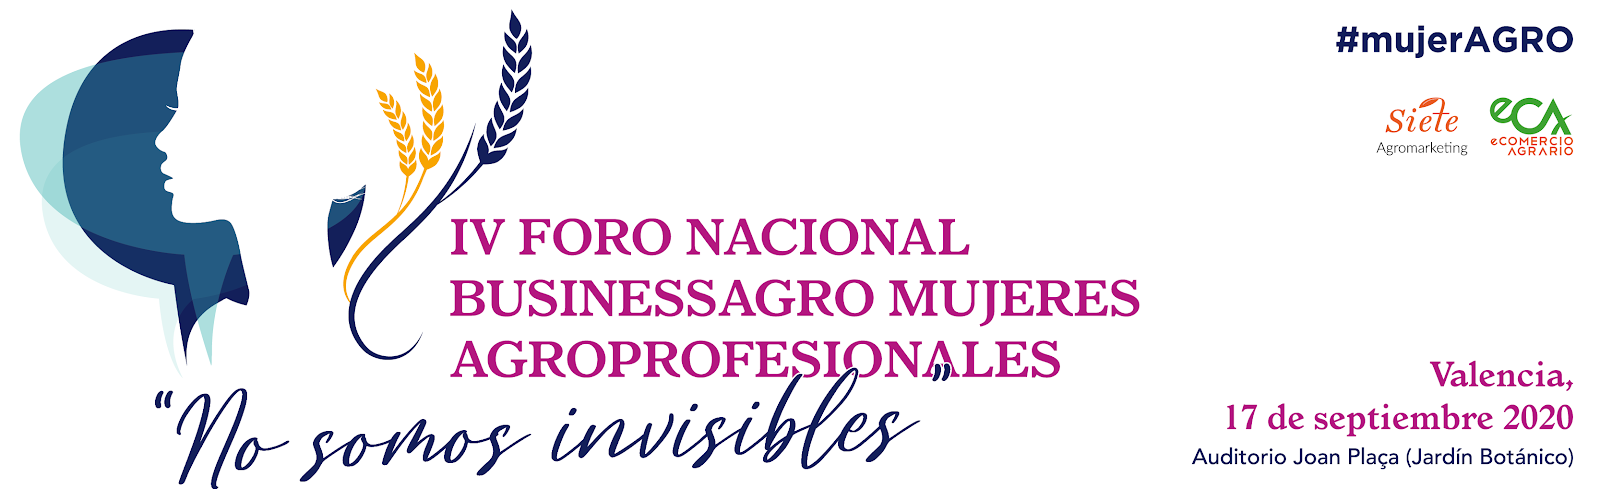 IV Foro Nacional BusinessAGRO Mujeres Agroprofresionales